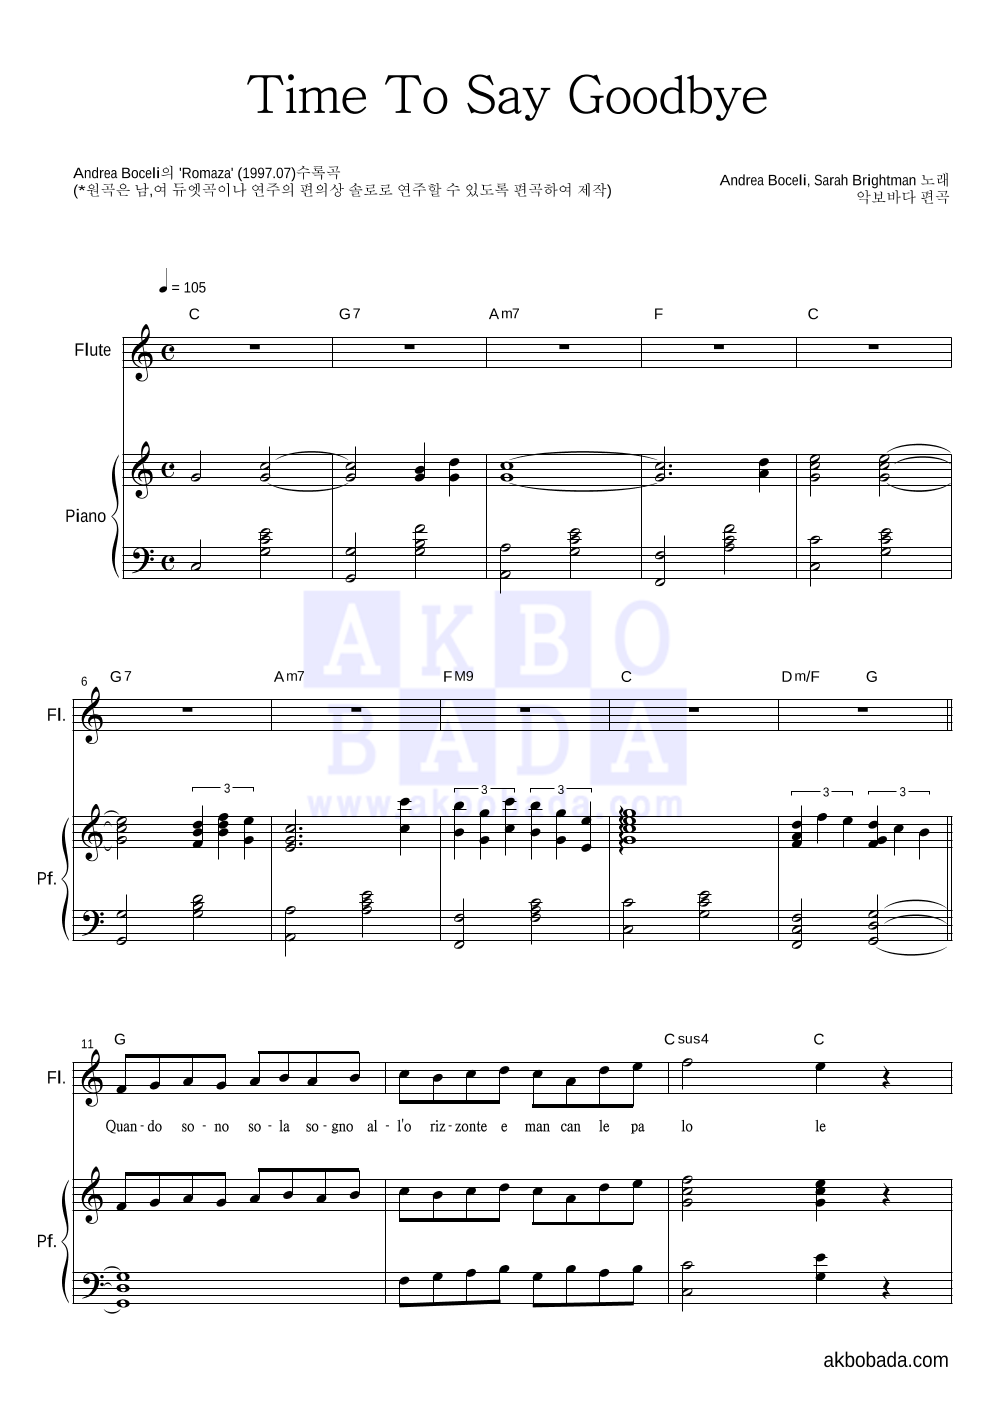 Andrea Bocelli - Time To Say Goodbye 플룻&피아노 악보 